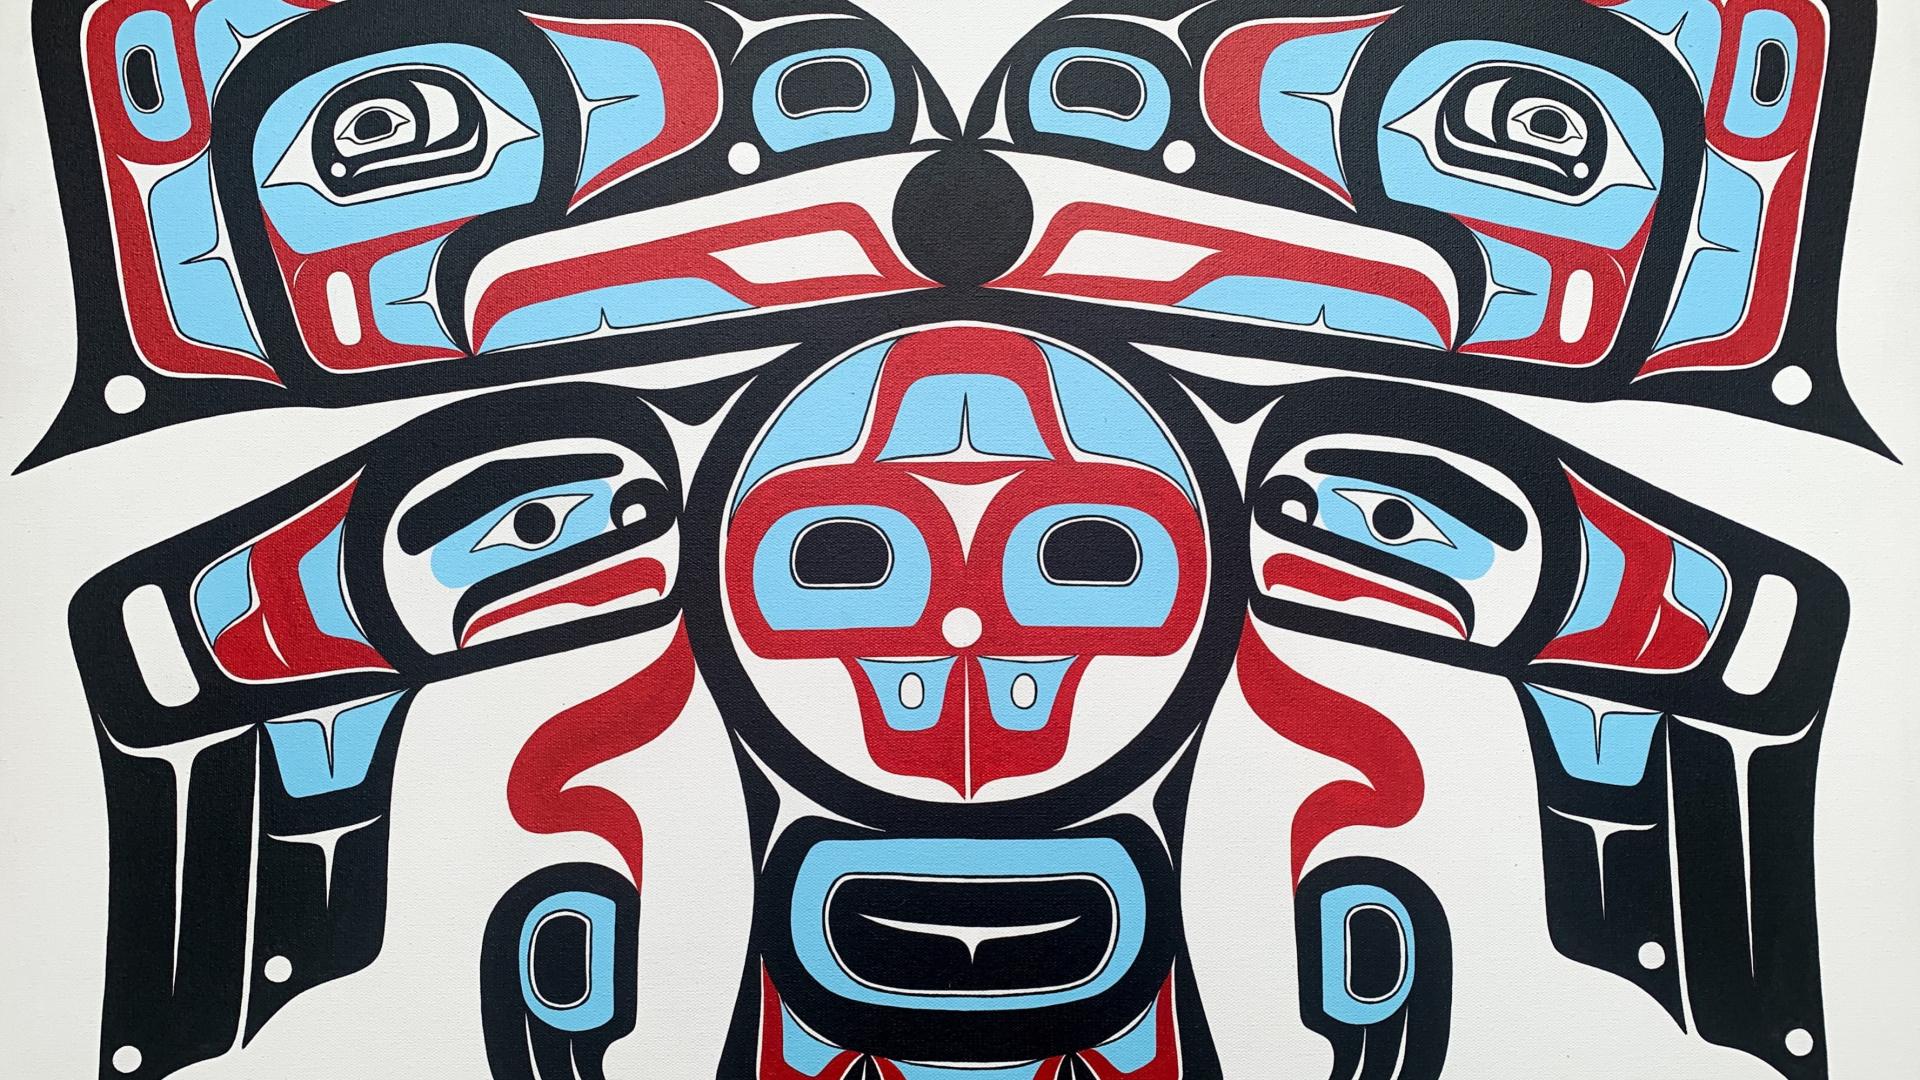 Raven”, by James Johnson, an accomplished Tlingit artist.